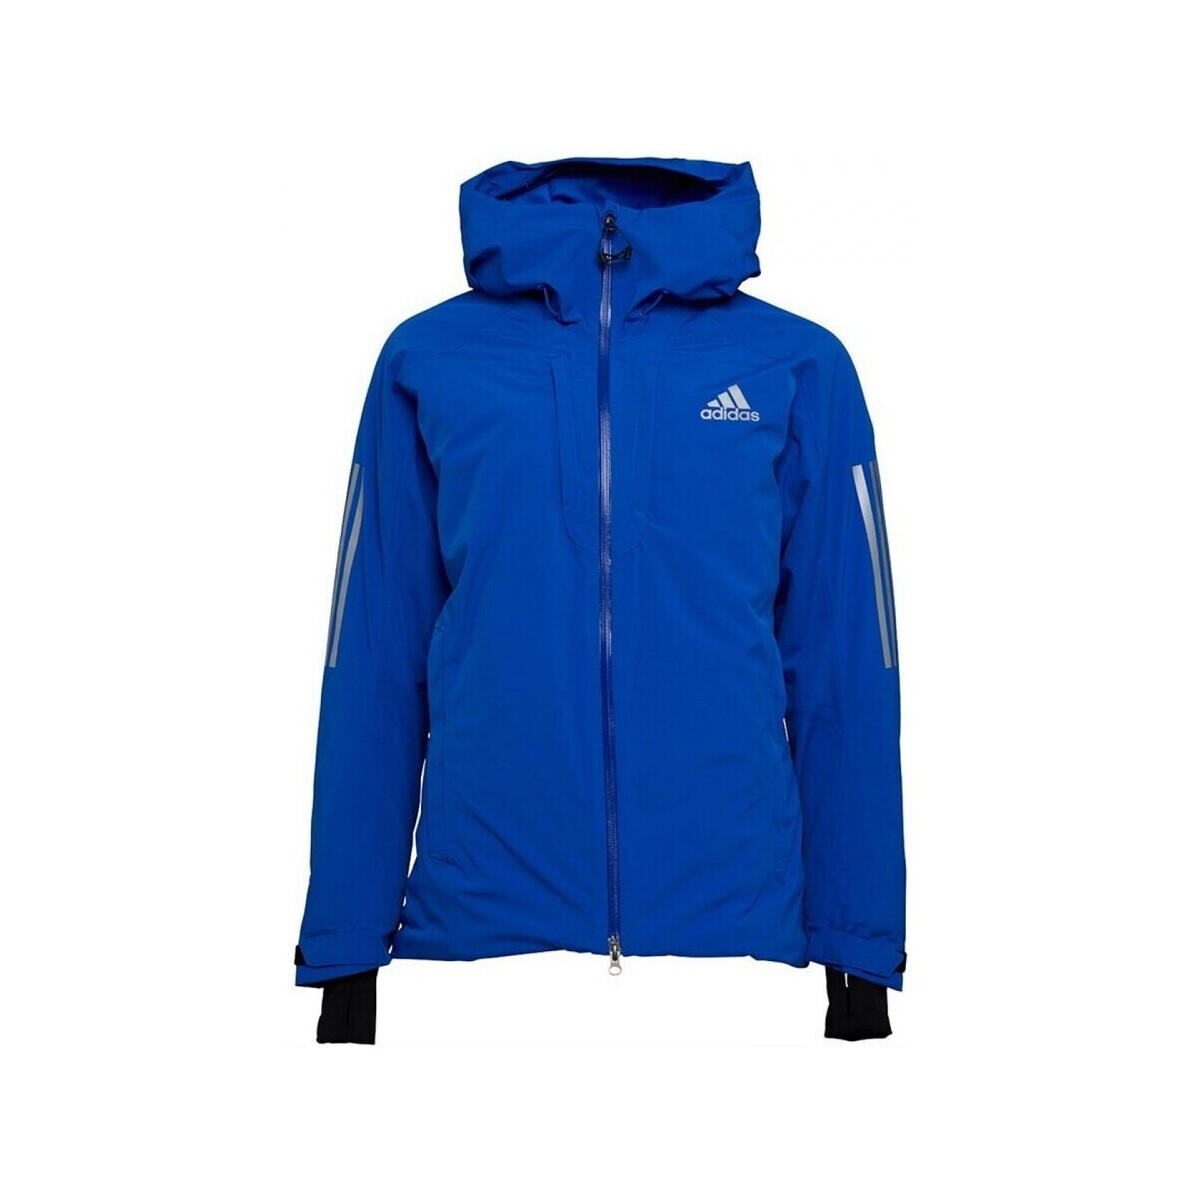 adidas Originals Bleu Adizero Winter Jacket W DtGO1wkS